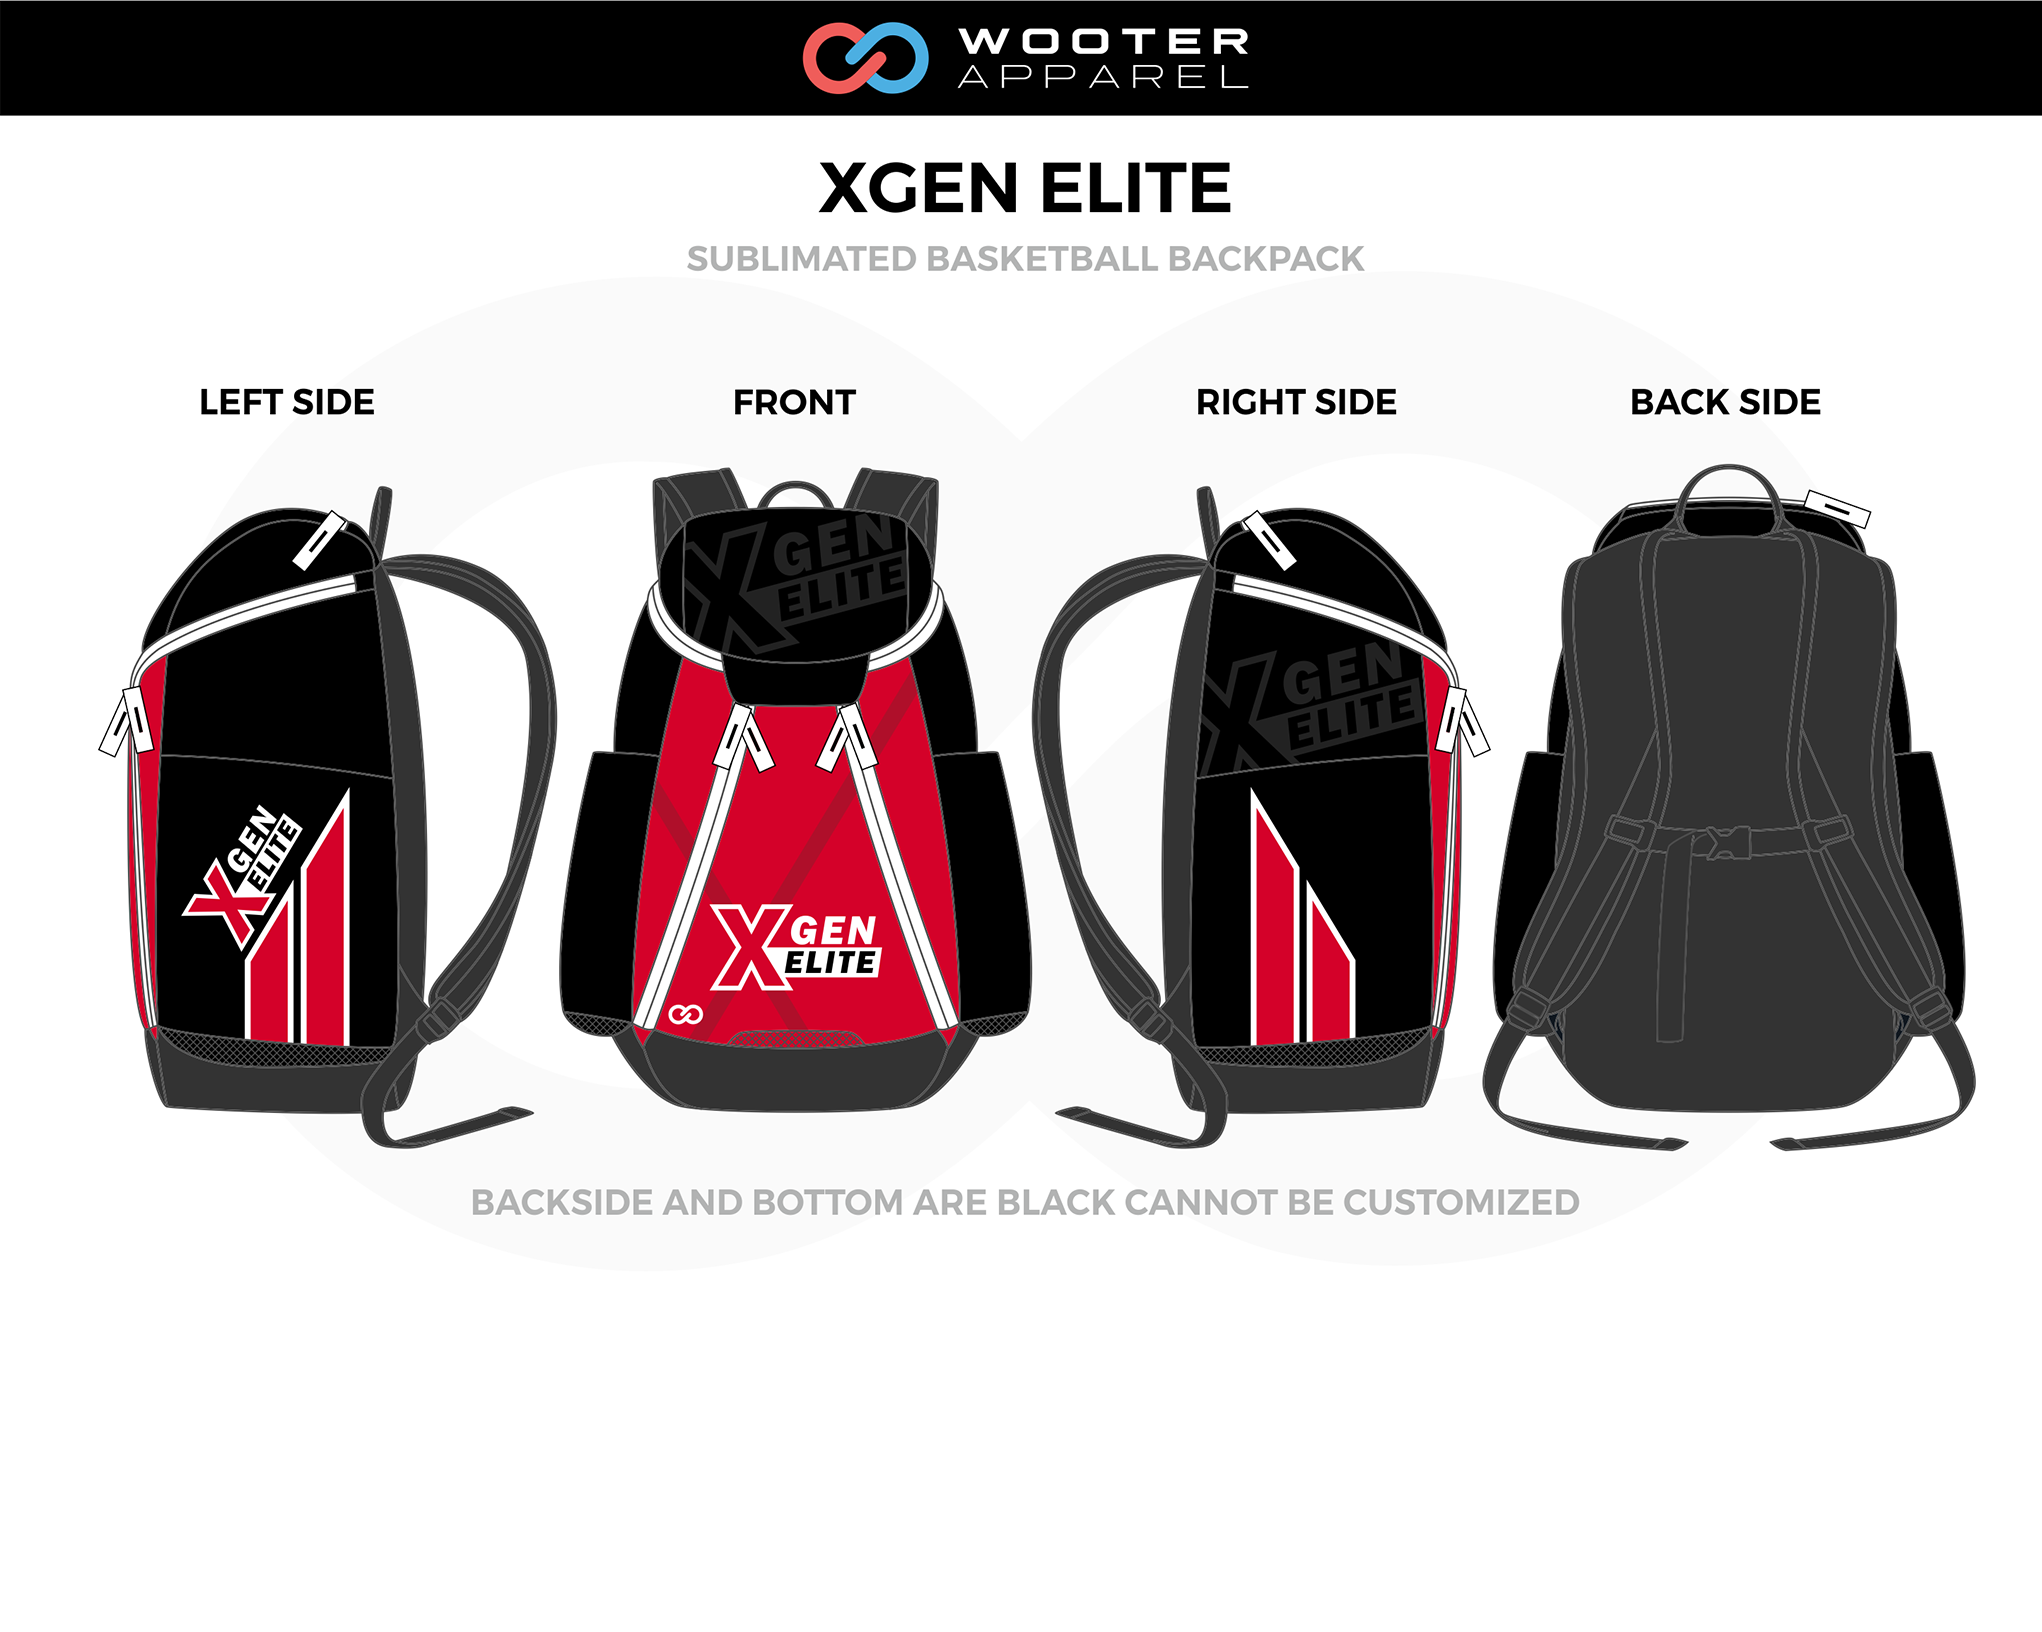 Custom Bags and Backpacks | Buy Bags and Backpacks Online | Wooter Apparel